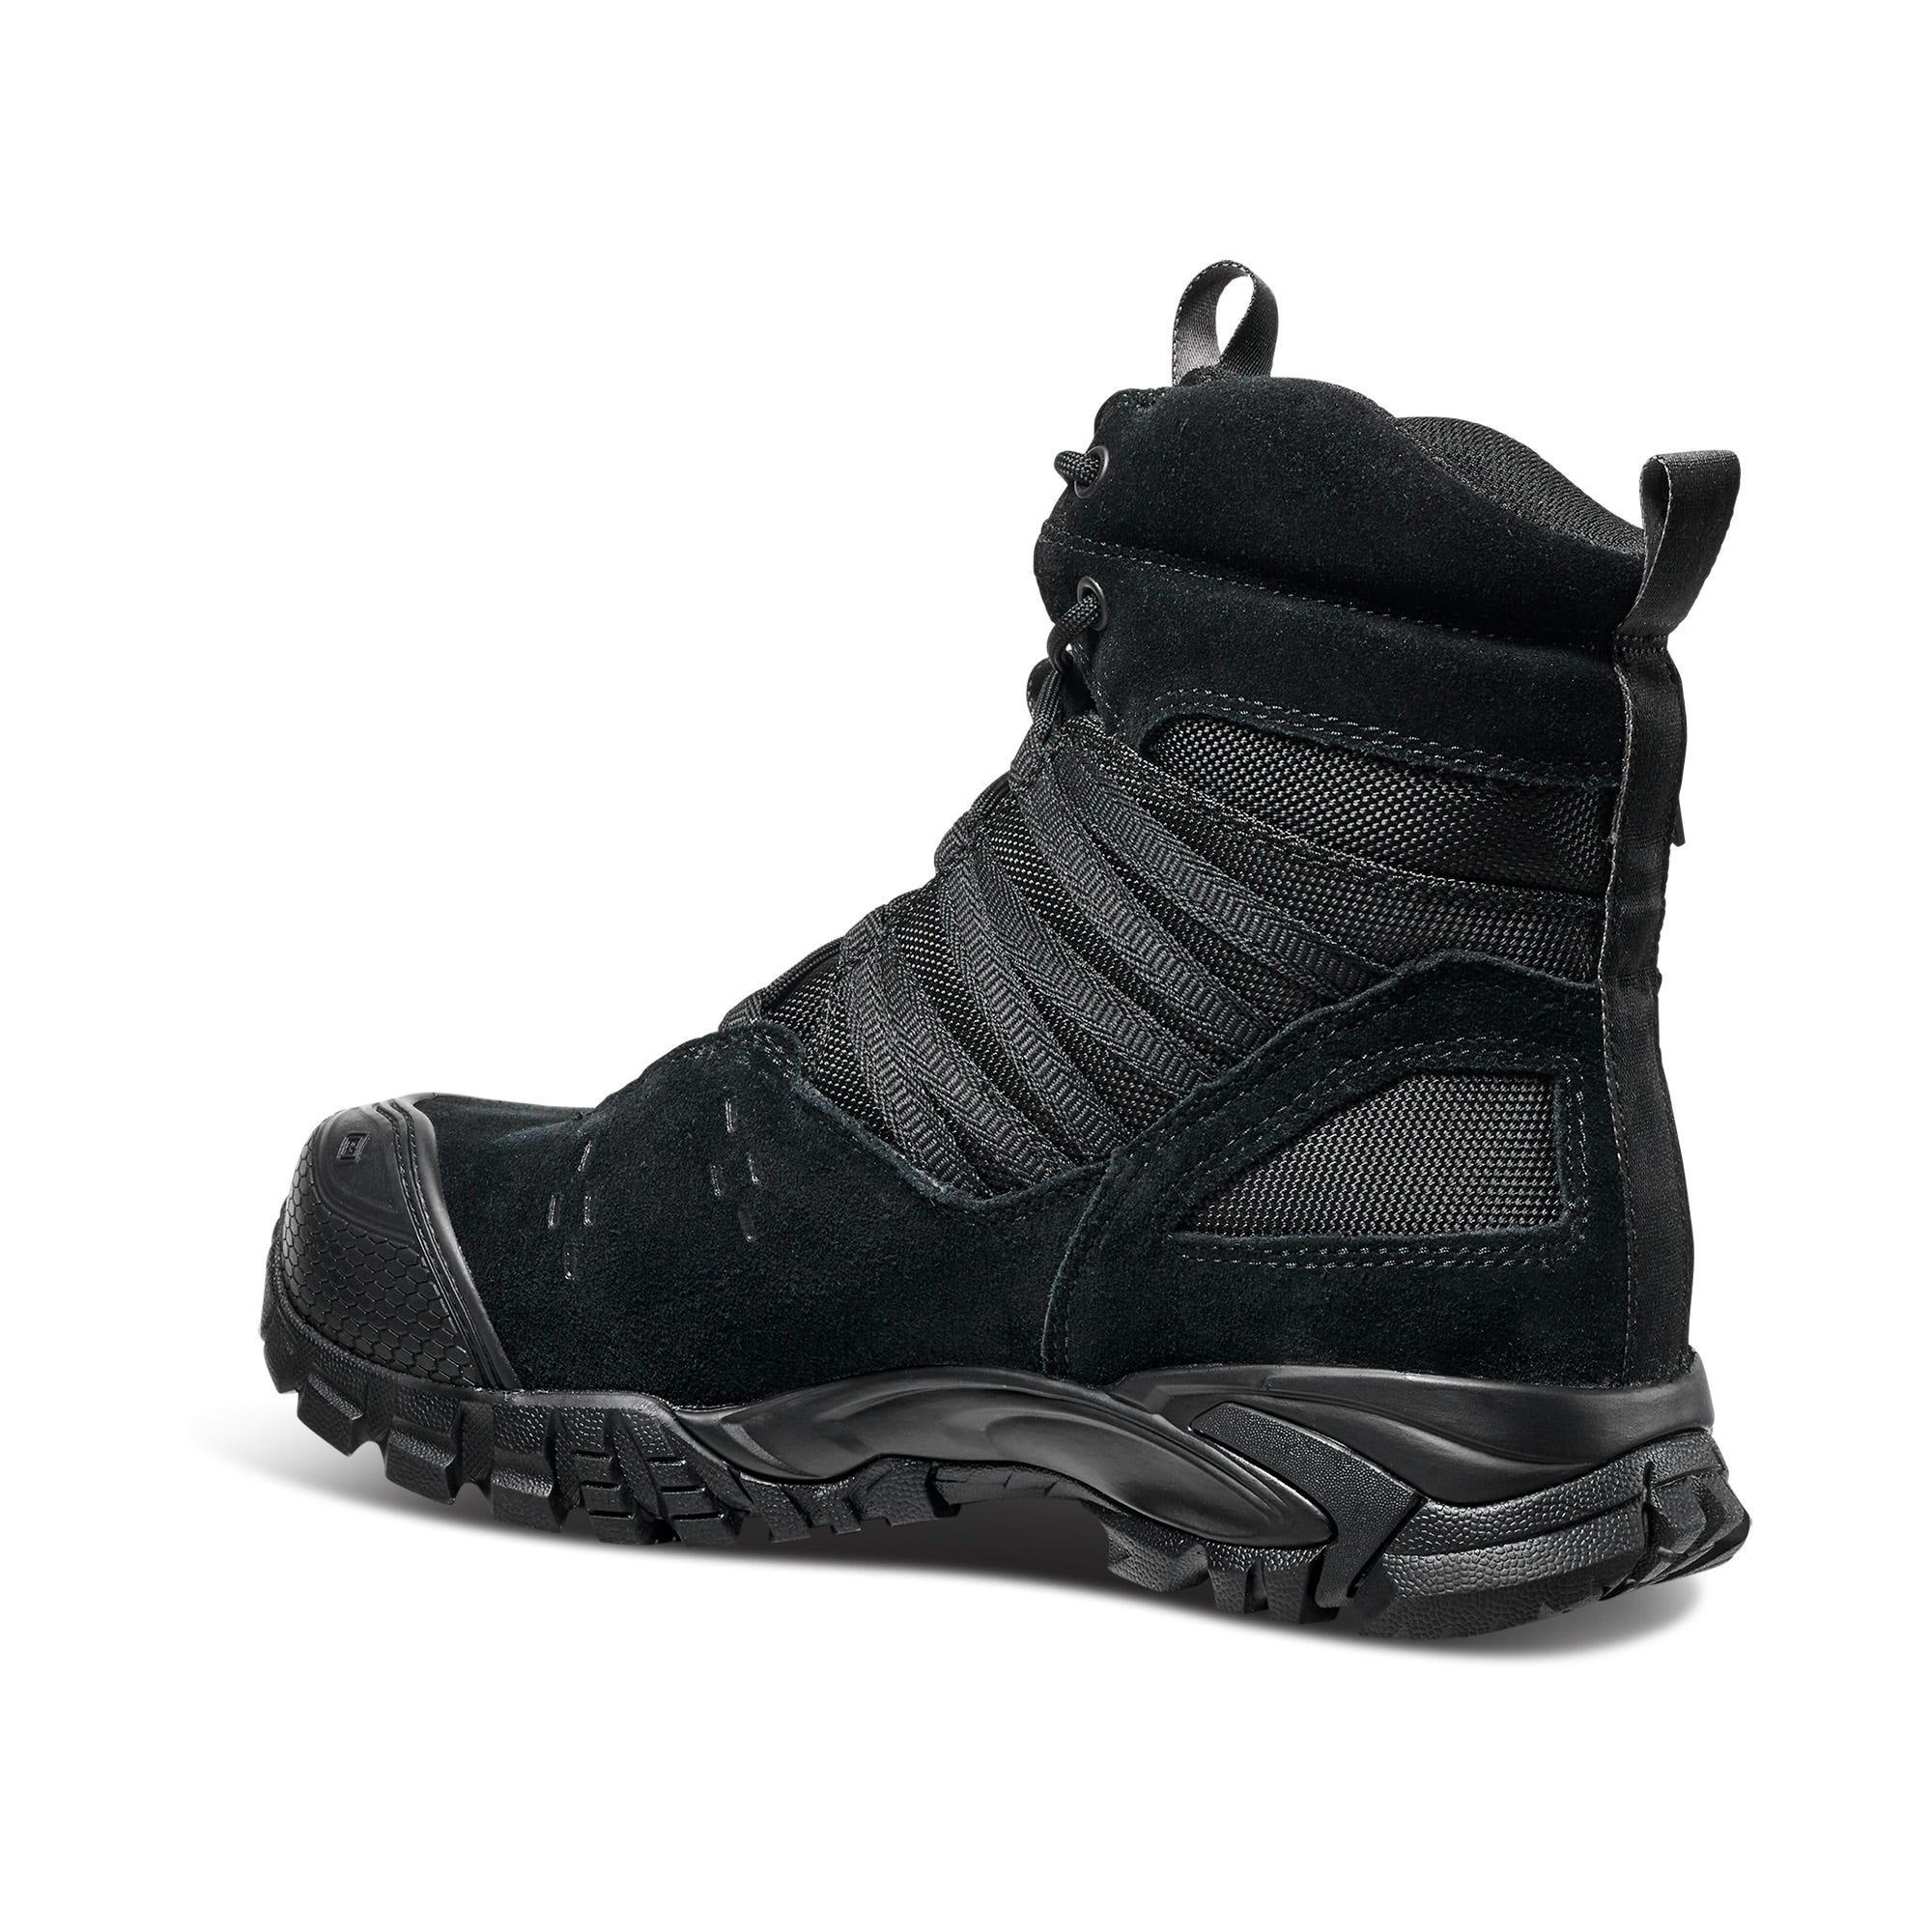 5.11 Work Gear Men's Union Waterproof 6-Inch Work Boots, Shock Absorbing Insole, Black, 7 Wide, Style 12390 - image 4 of 8